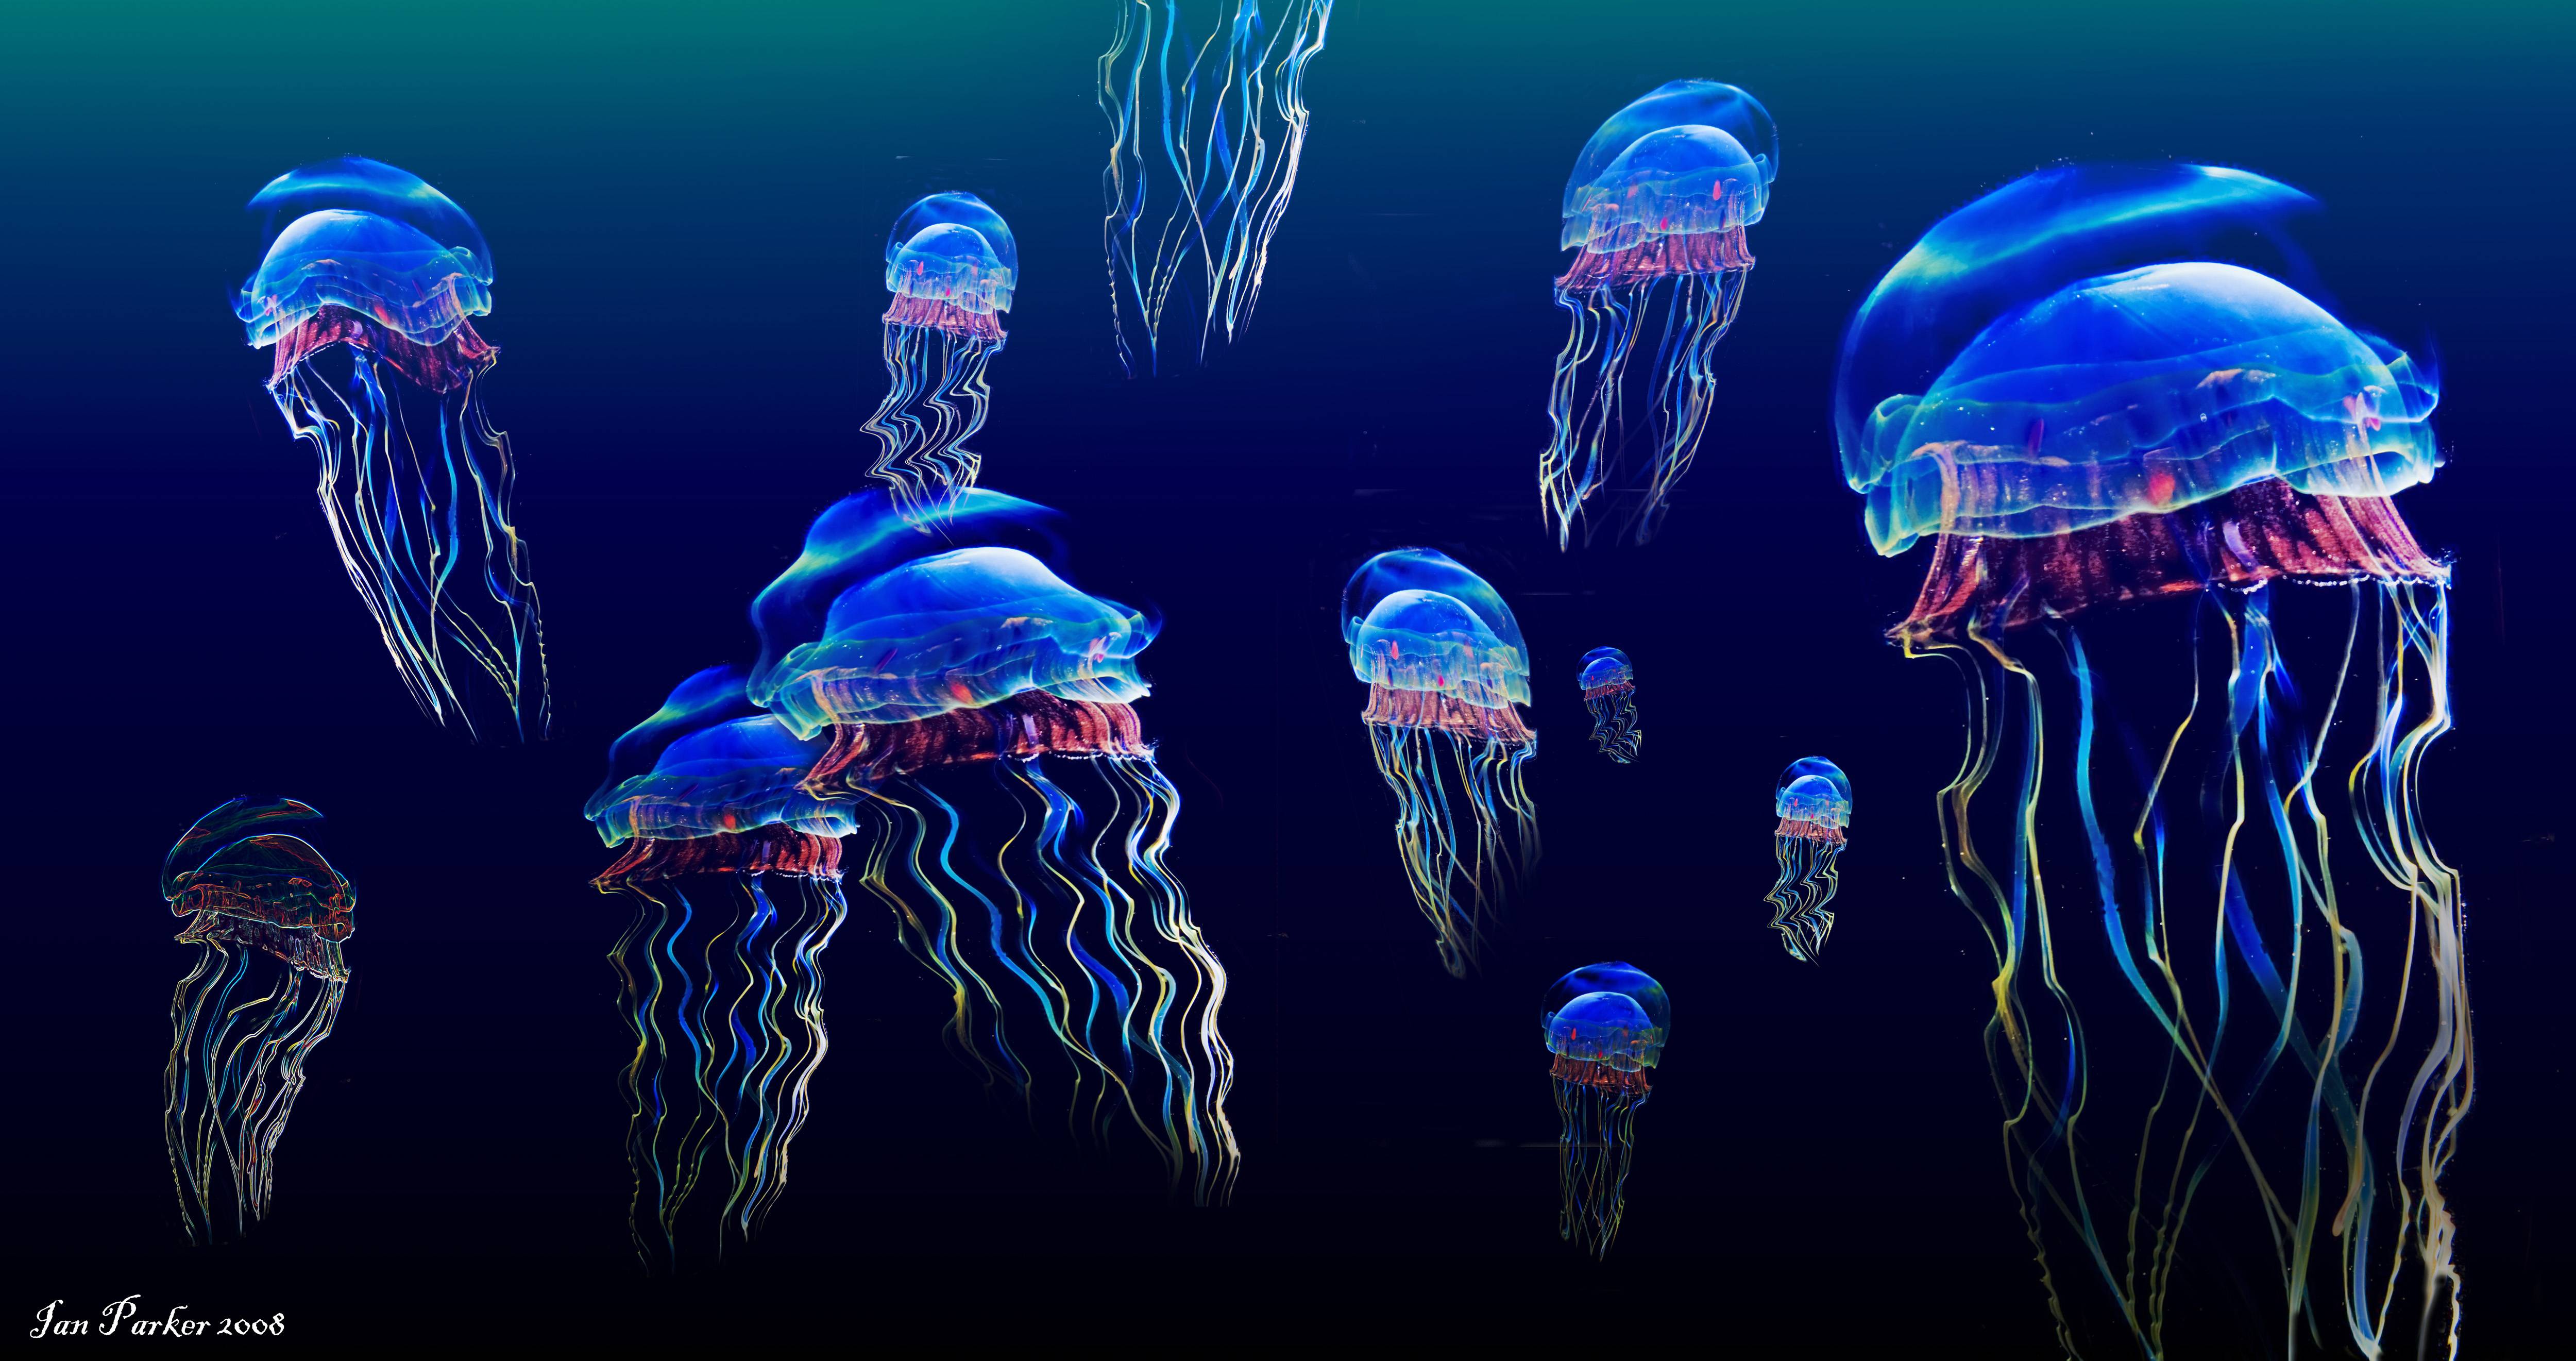 Wallpaper For > Glowing Jellyfish Wallpaper